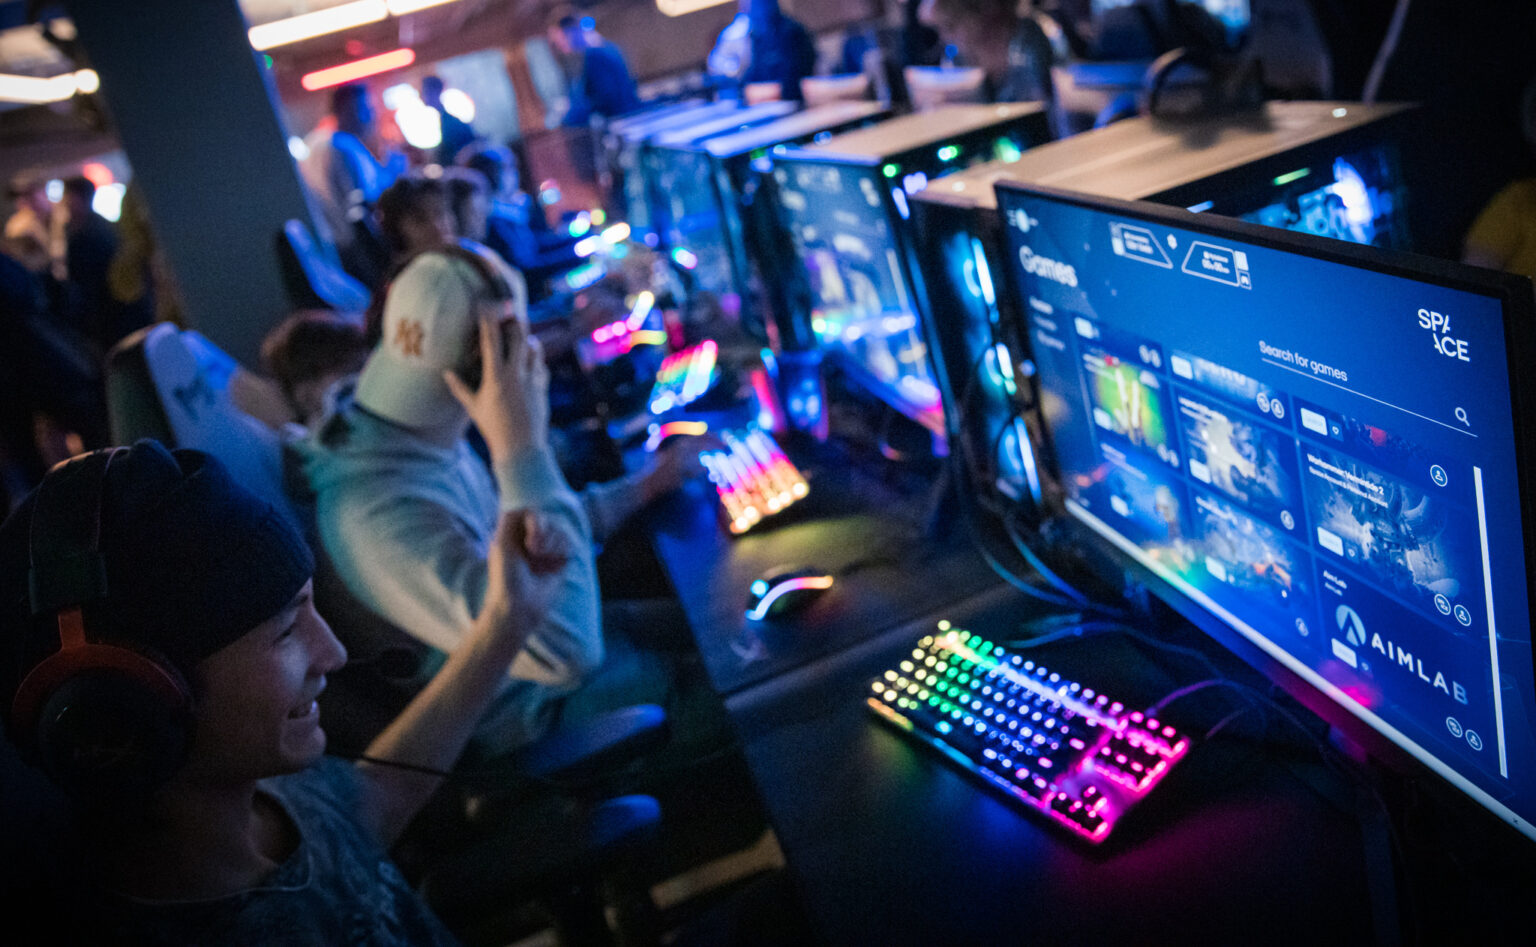 gamers at SPACE Gaming Stockholm